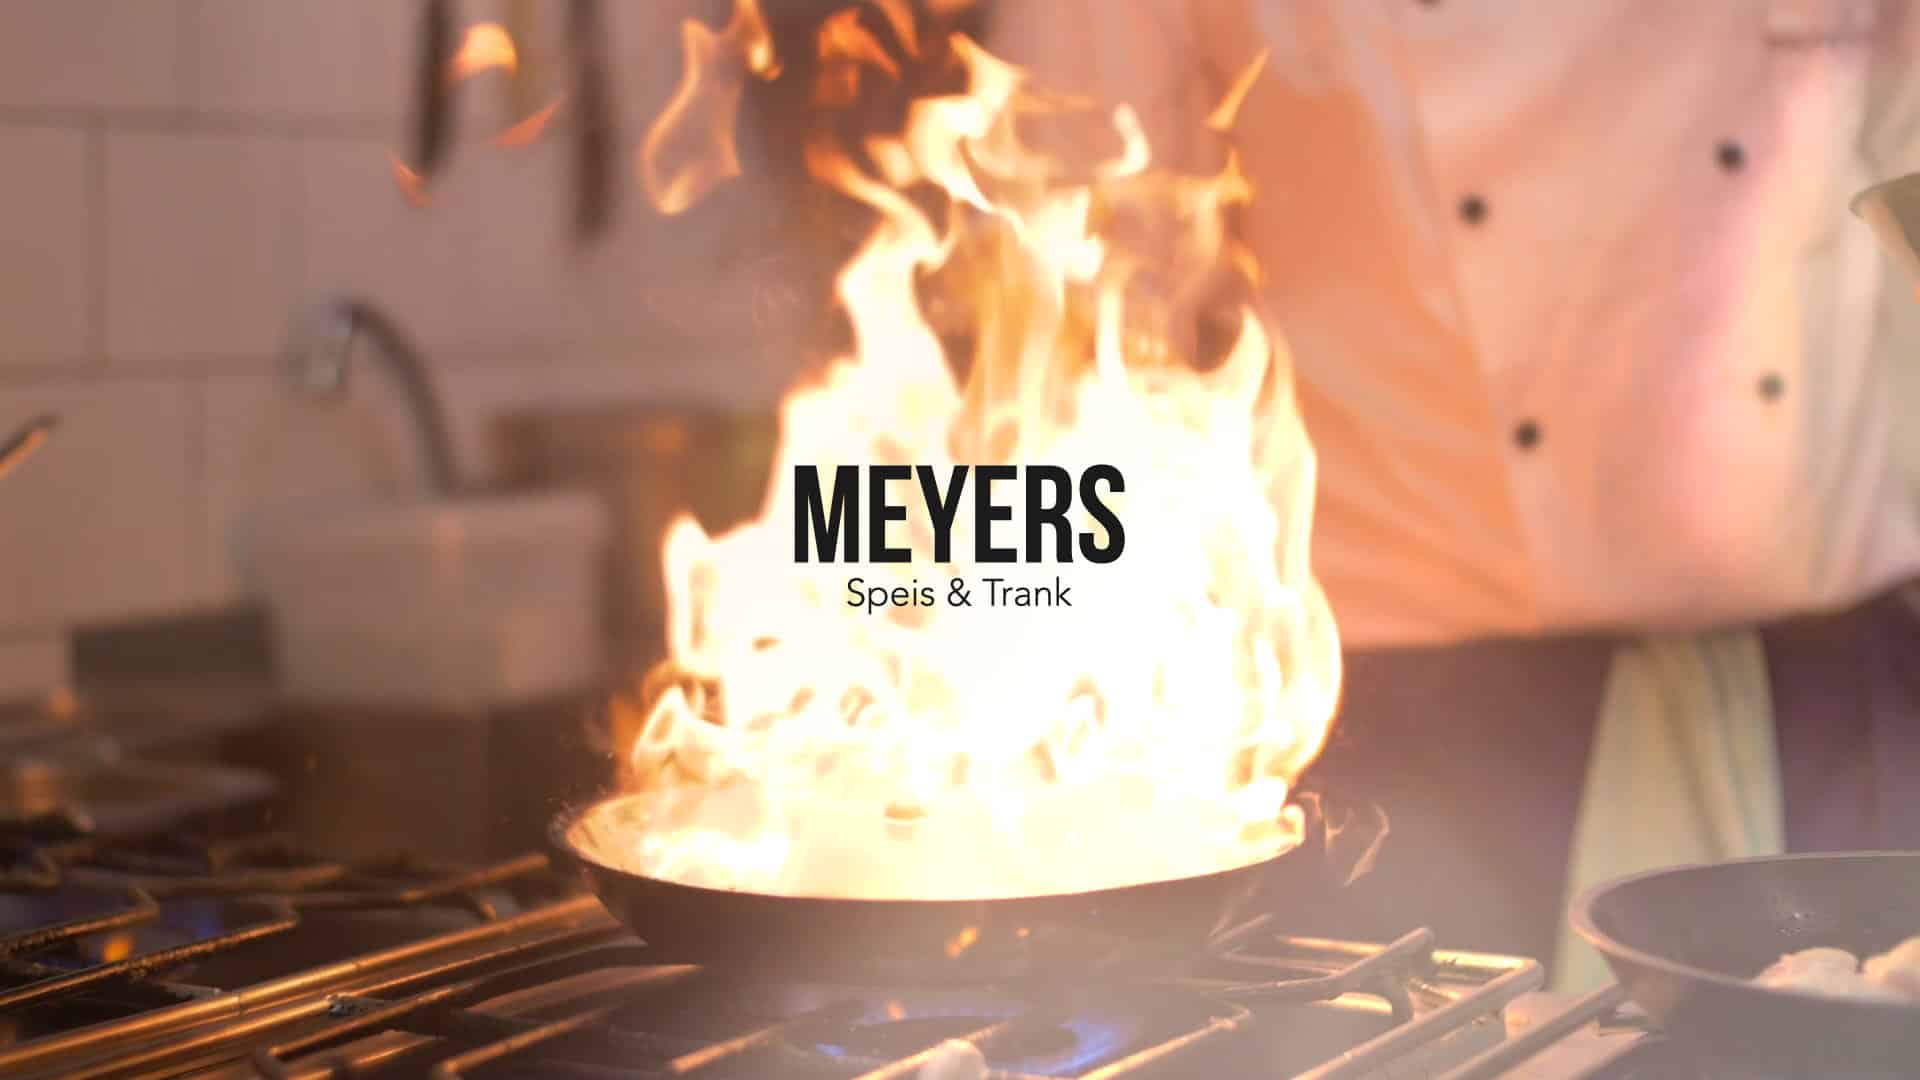 Das Image Video des Meyers & Speis & Trank